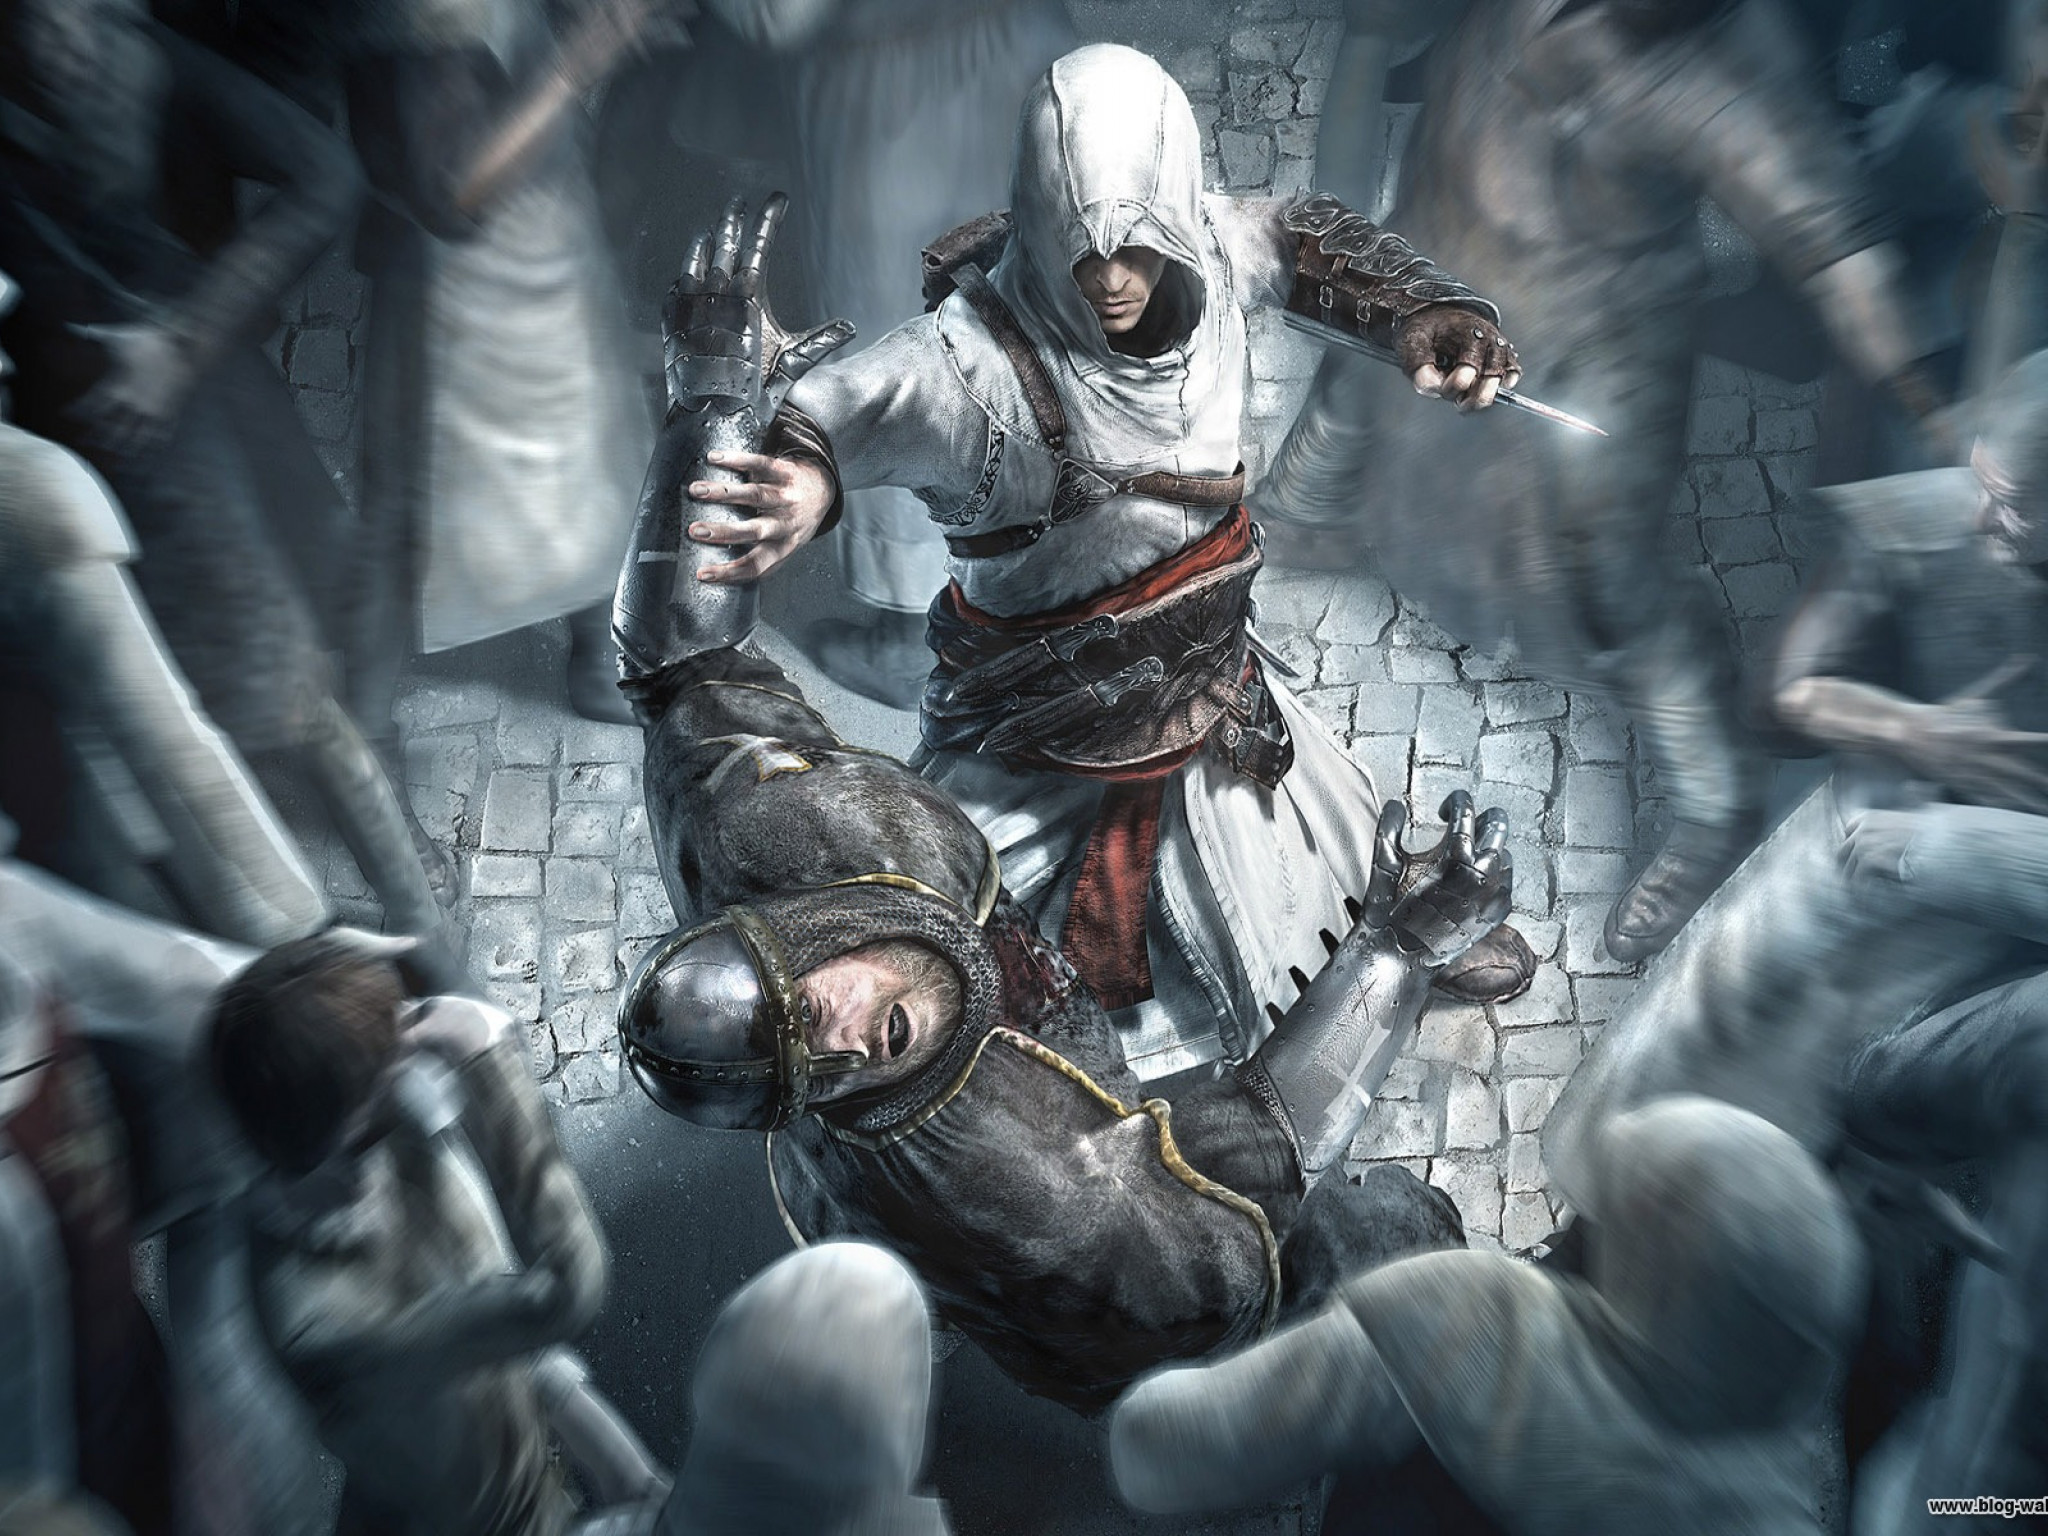 Assassins Creed 11